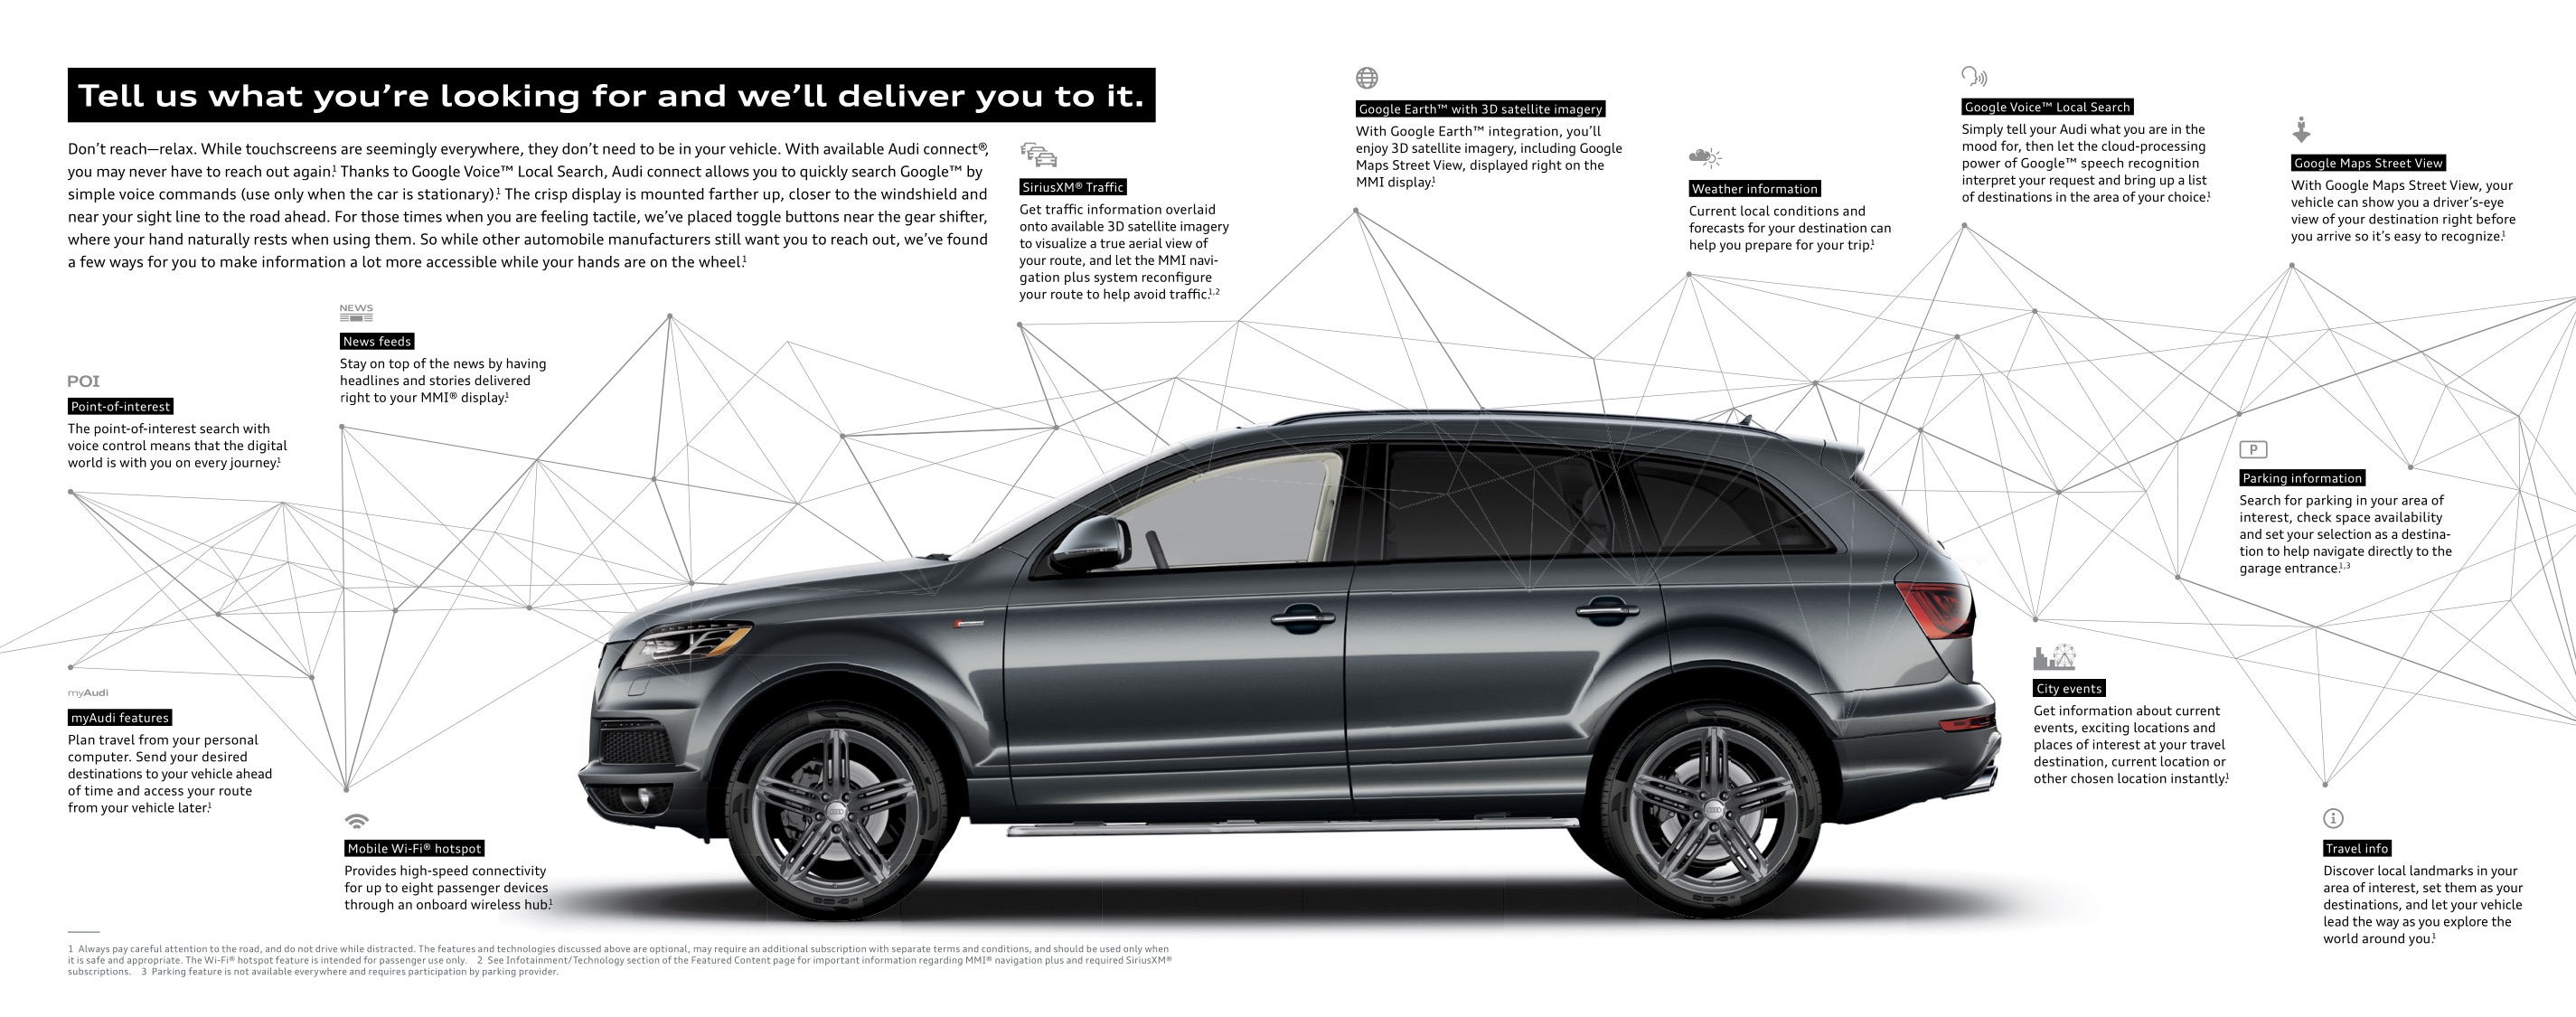 2015 Audi Q7 Brochure Page 14